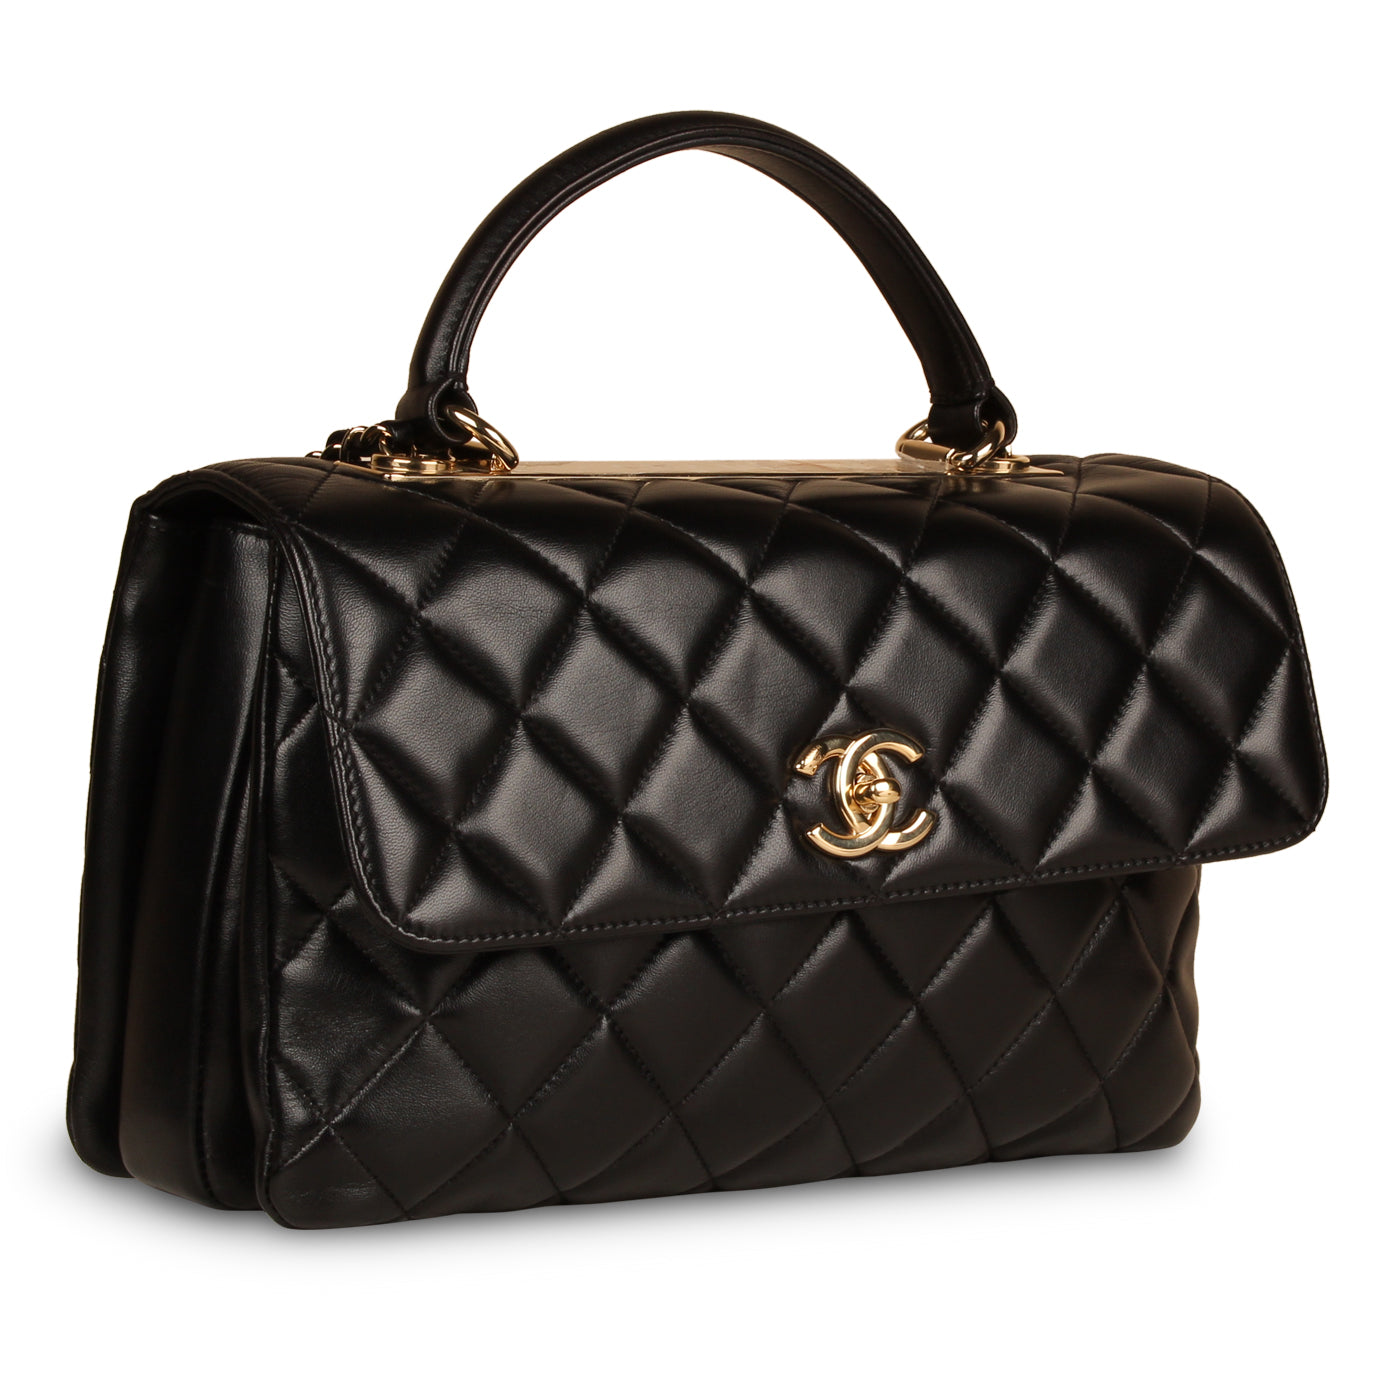 Chanel Trendy Cc patent leather handbag - Gem